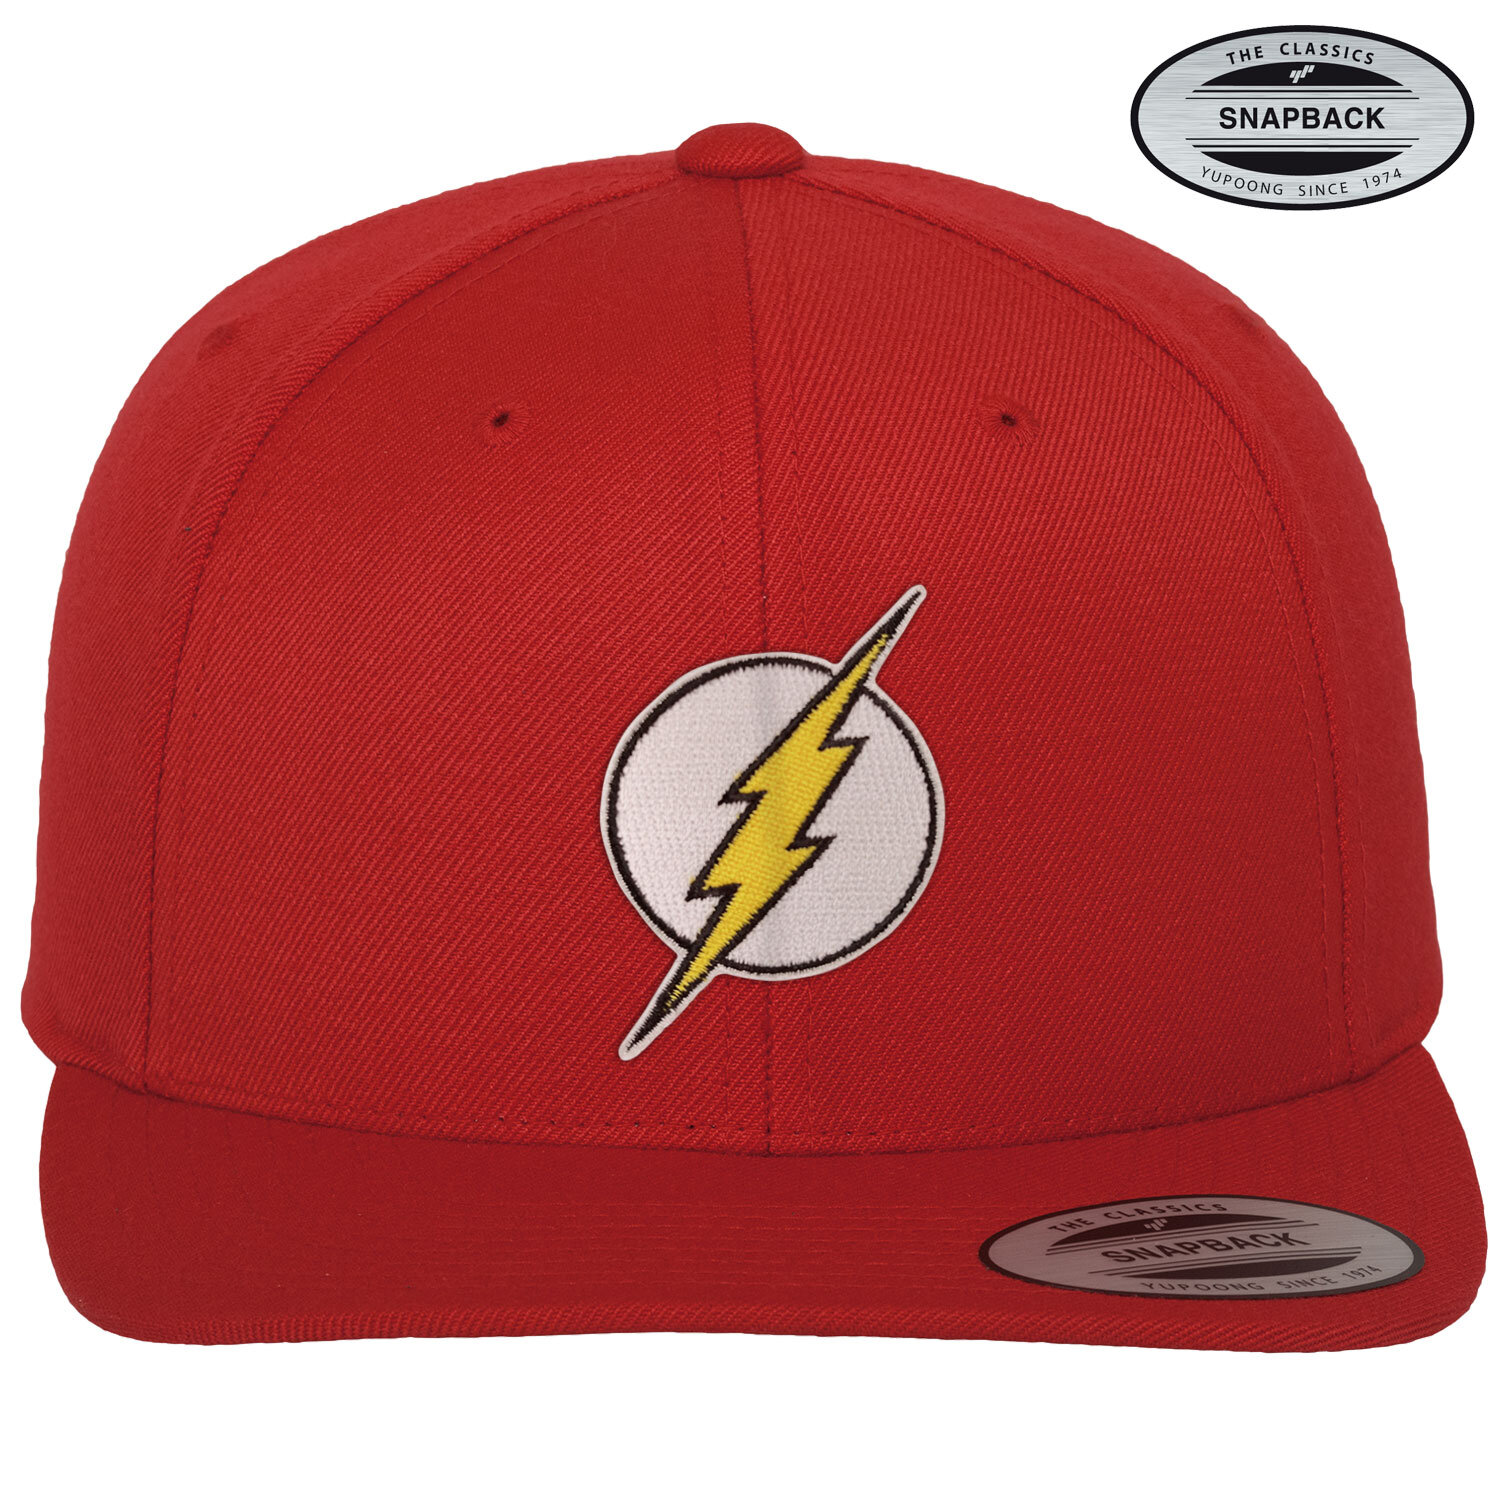 The Cap Premium - Shirtstore Snapback Flash